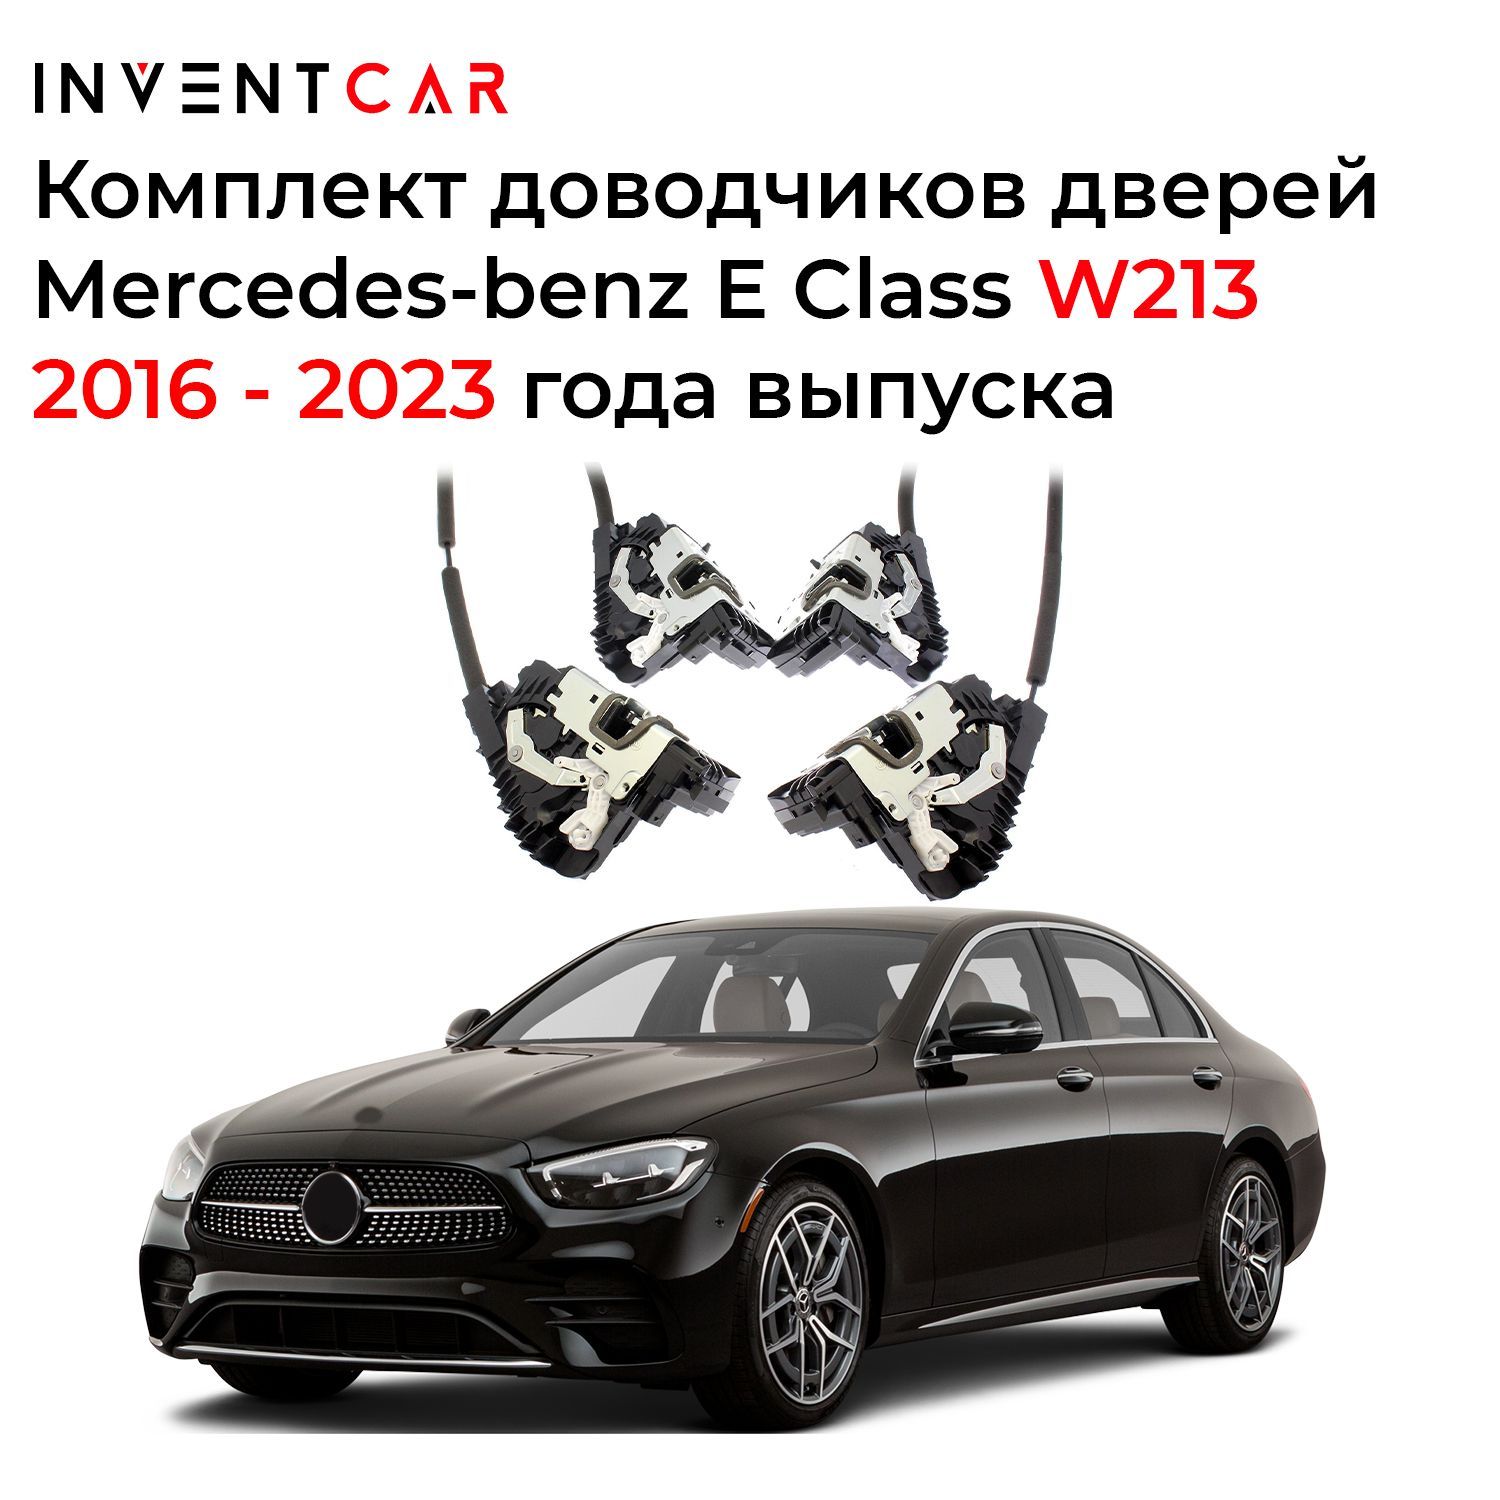 Доводчики дверей Mercedes-benz E Class W213 2016+